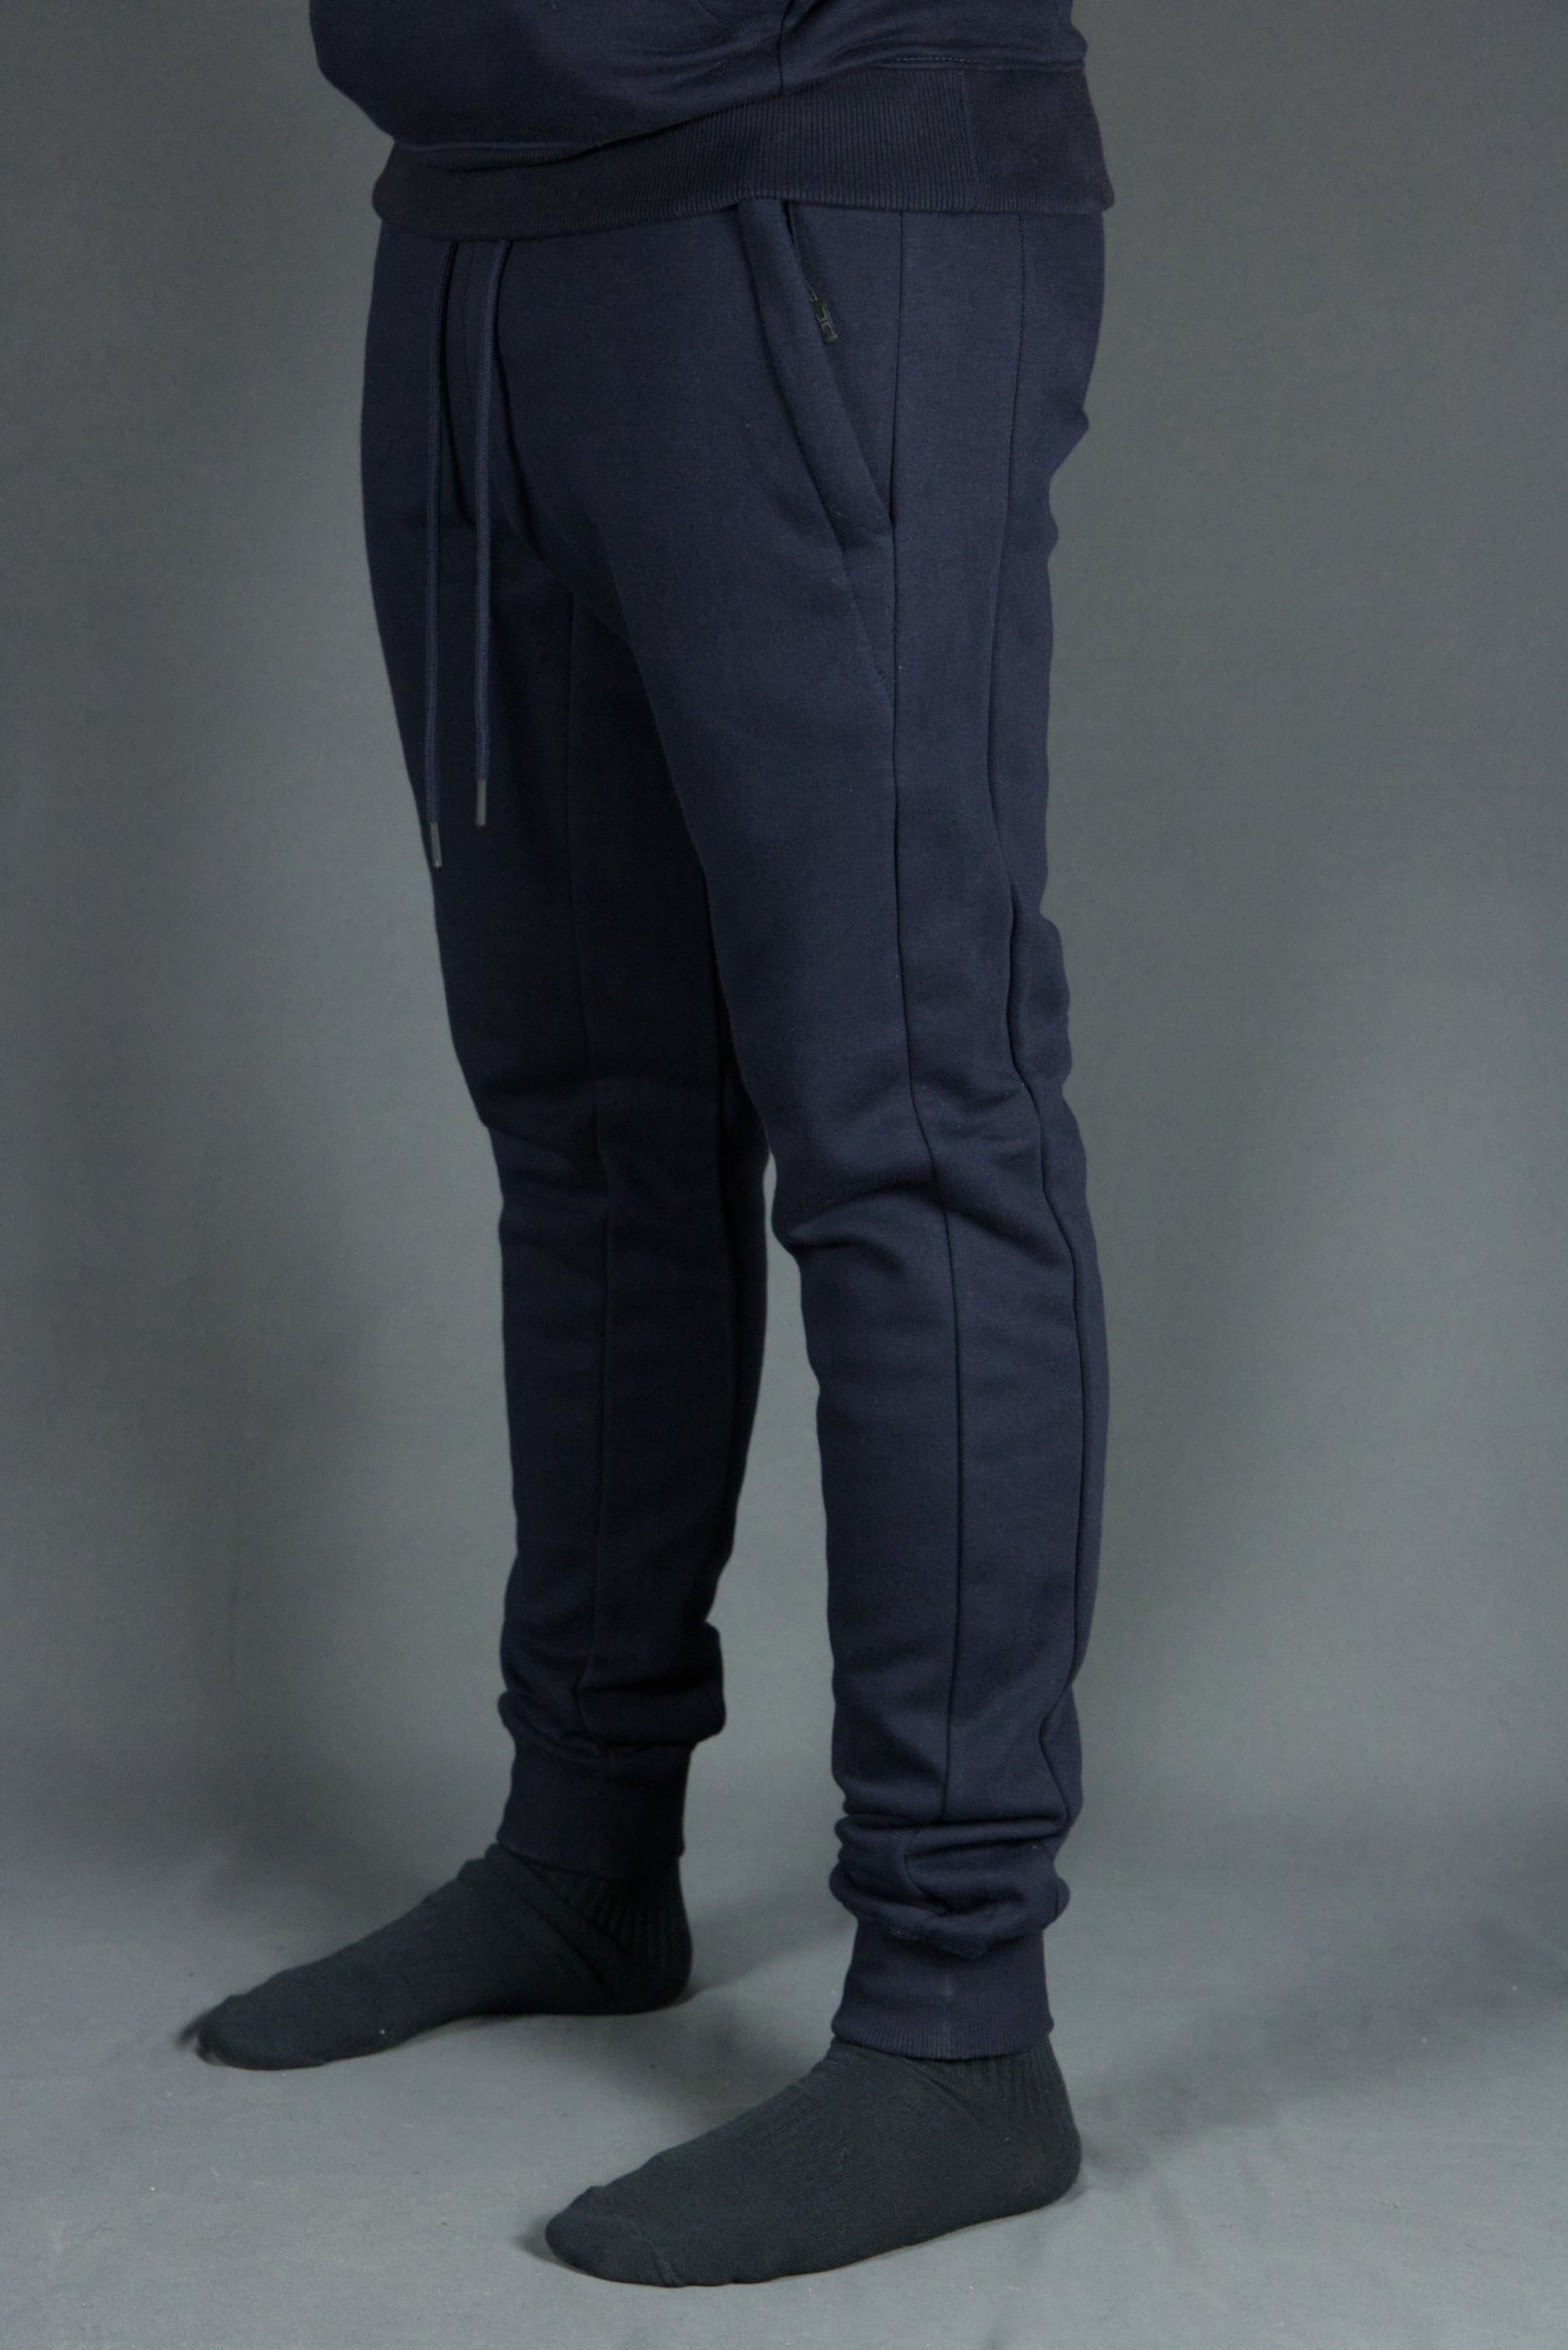 The navy Jordan Craig sweatpants with cool logo trim bottom.